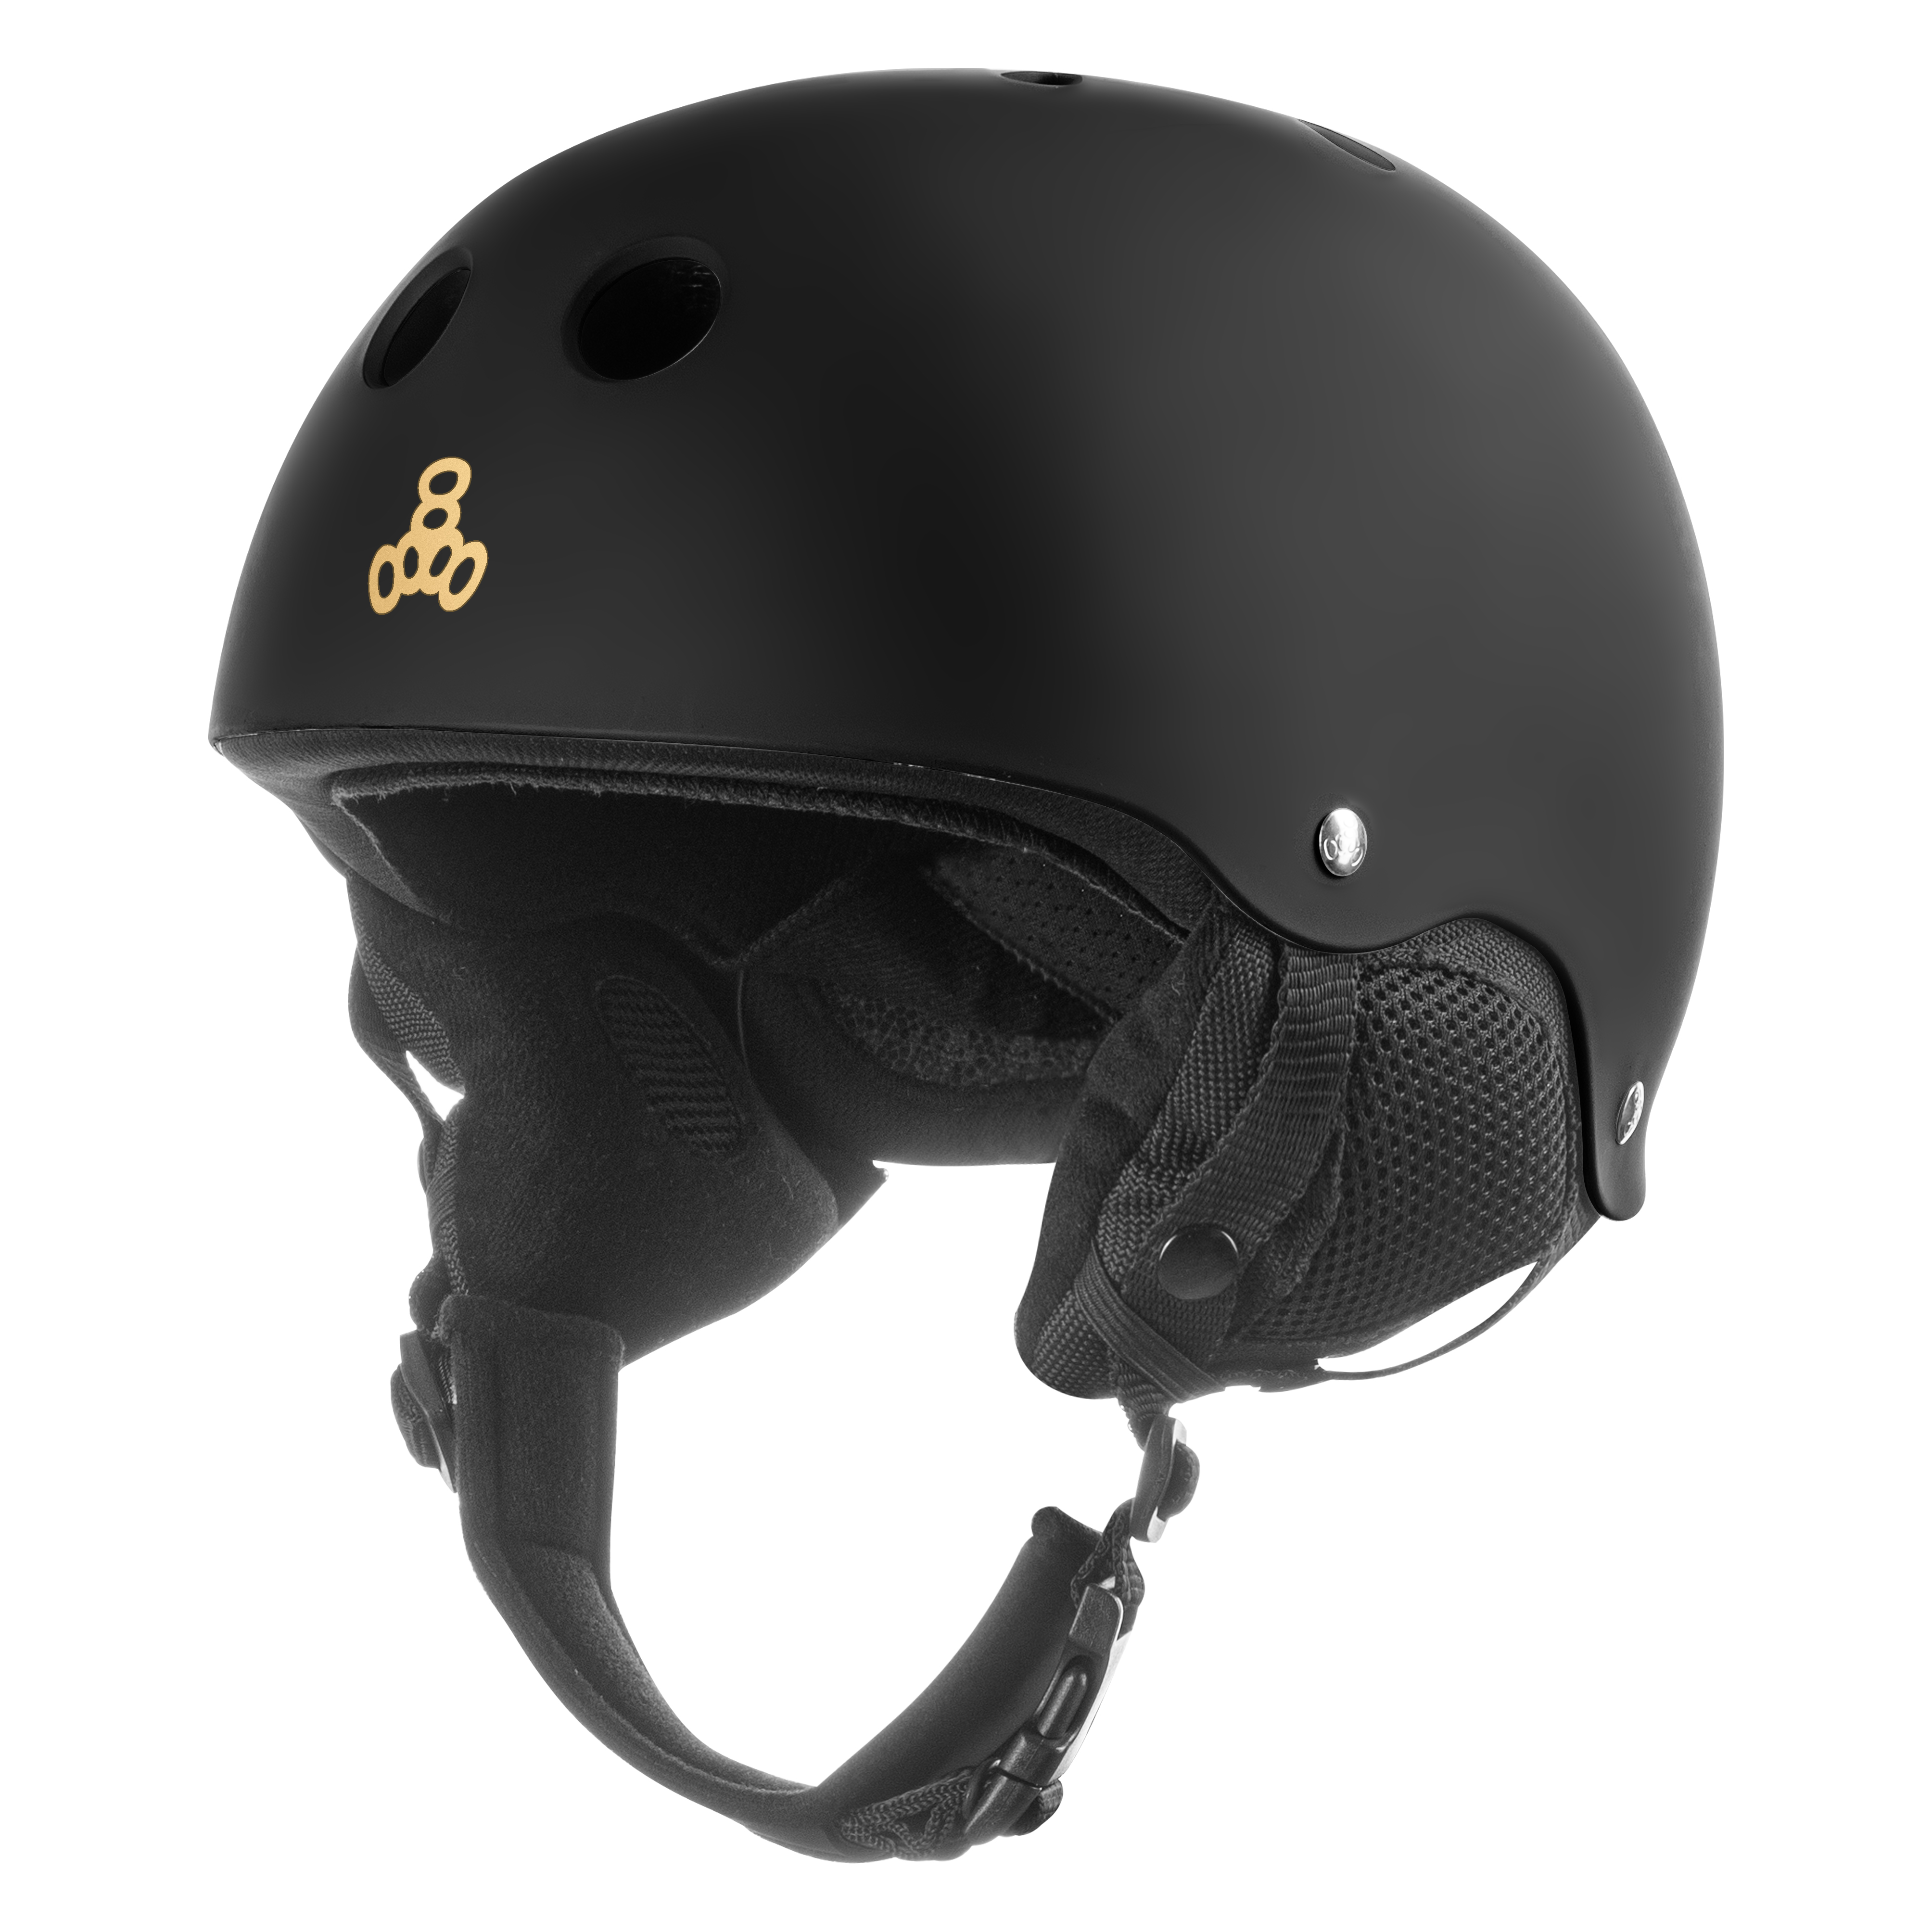 Защитный шлем для взрослых Triple8 Old School Snow Black Rubber (XS)